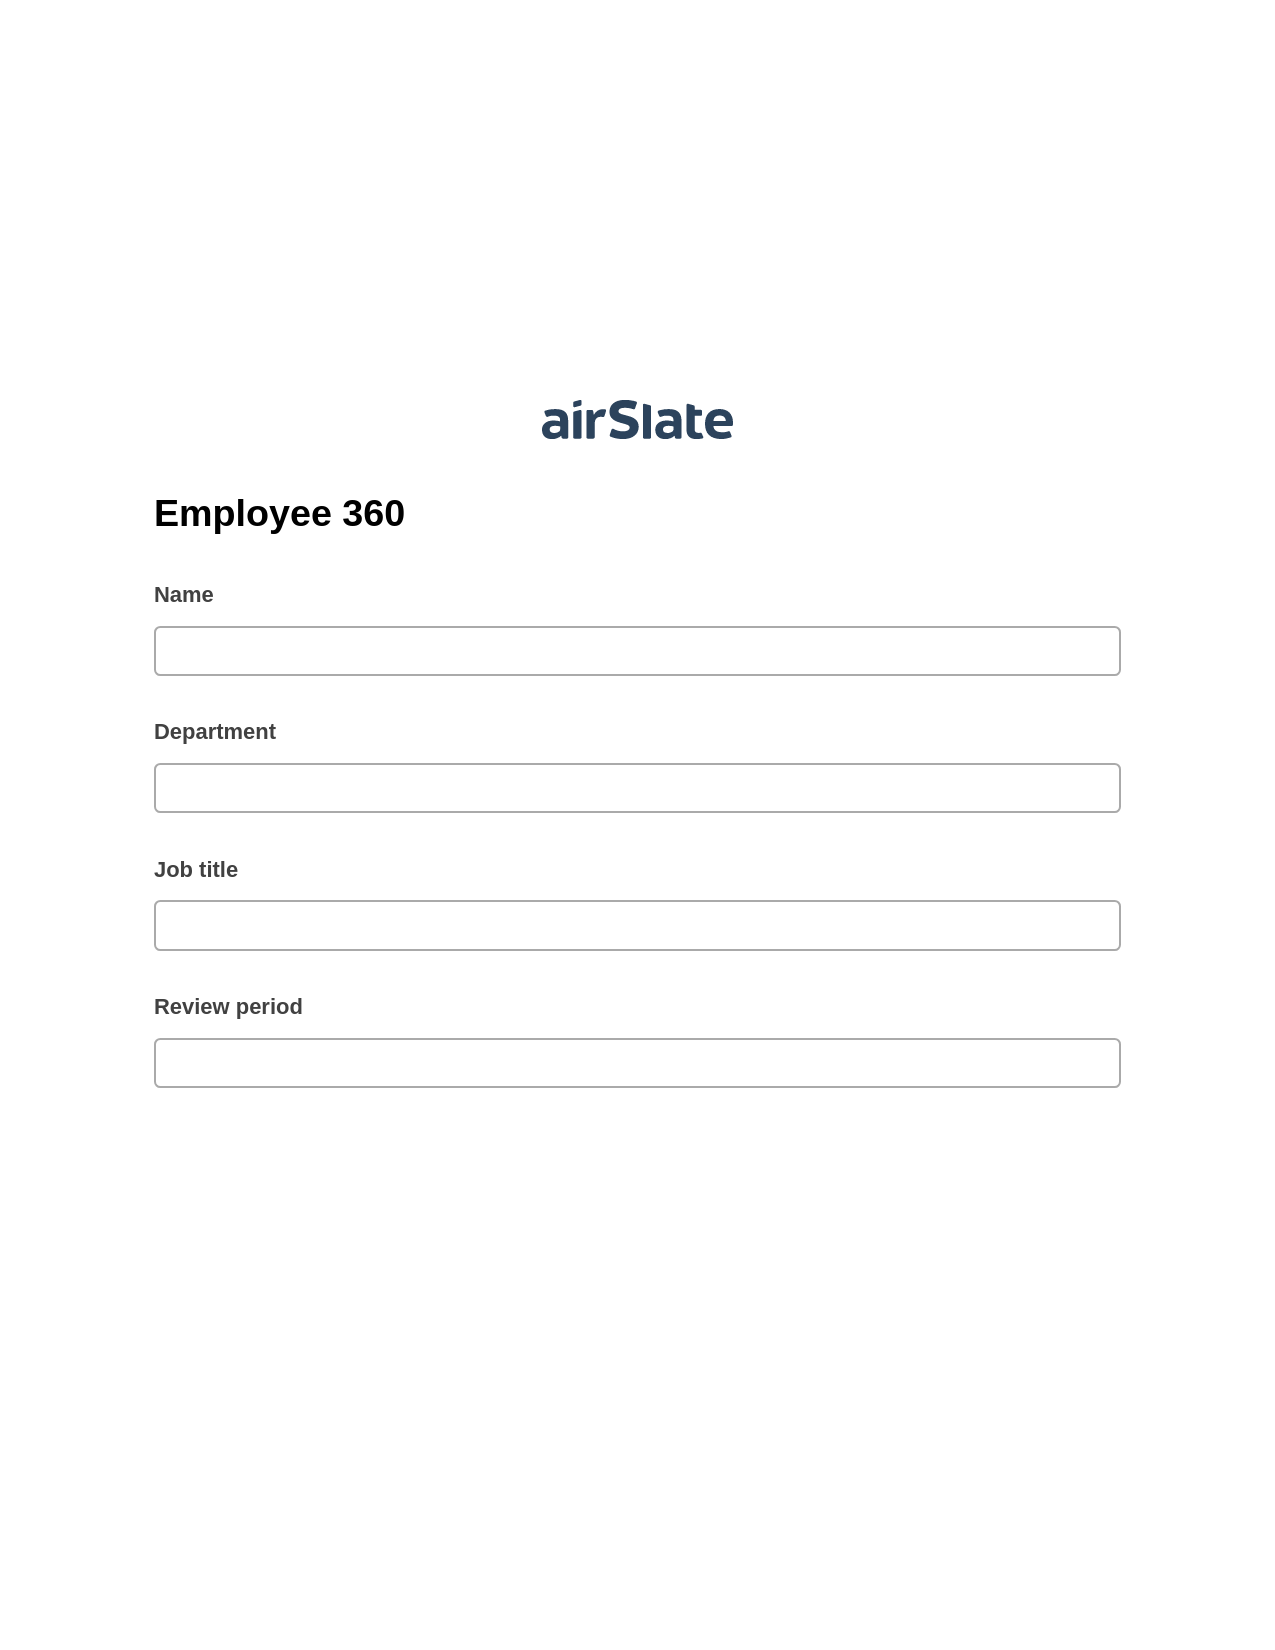 Employee 360 Pre-fill from Salesforce Records Bot, Update MS Dynamics 365 Record Bot, Slack Notification Postfinish Bot